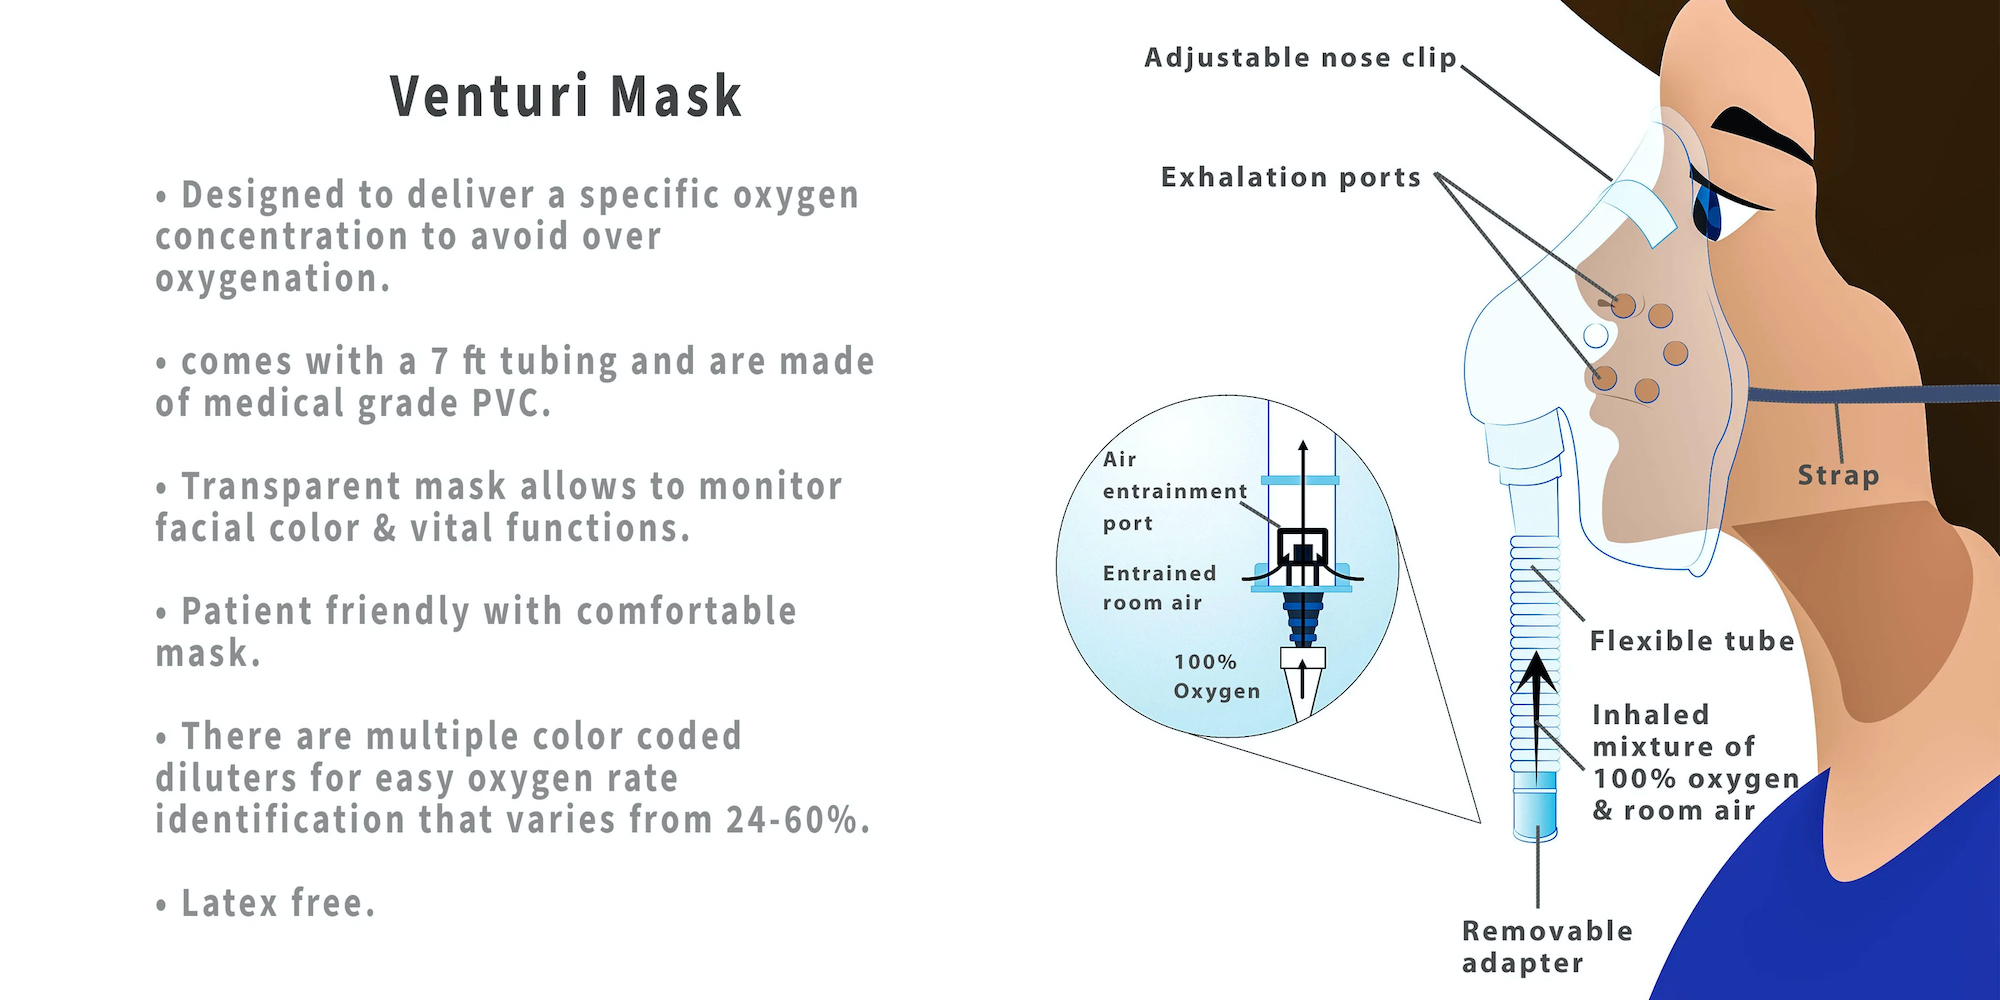 Multi-vent (Venturi System) Air Entrainment Mask